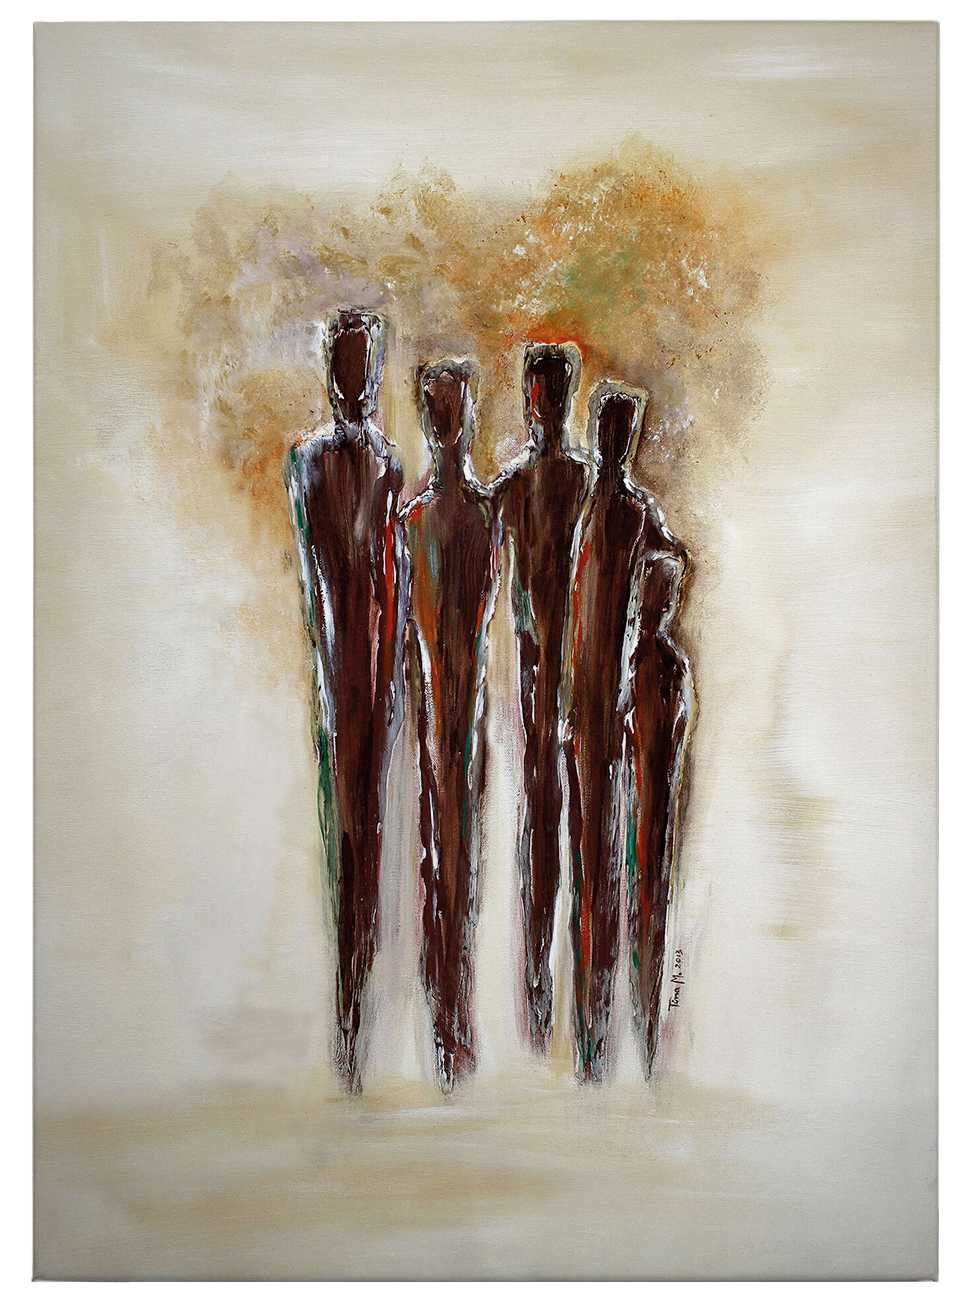             Cuadro arte Tina Melz "Juntos 02", formato retrato - 0,50 m x 0,70 m
        